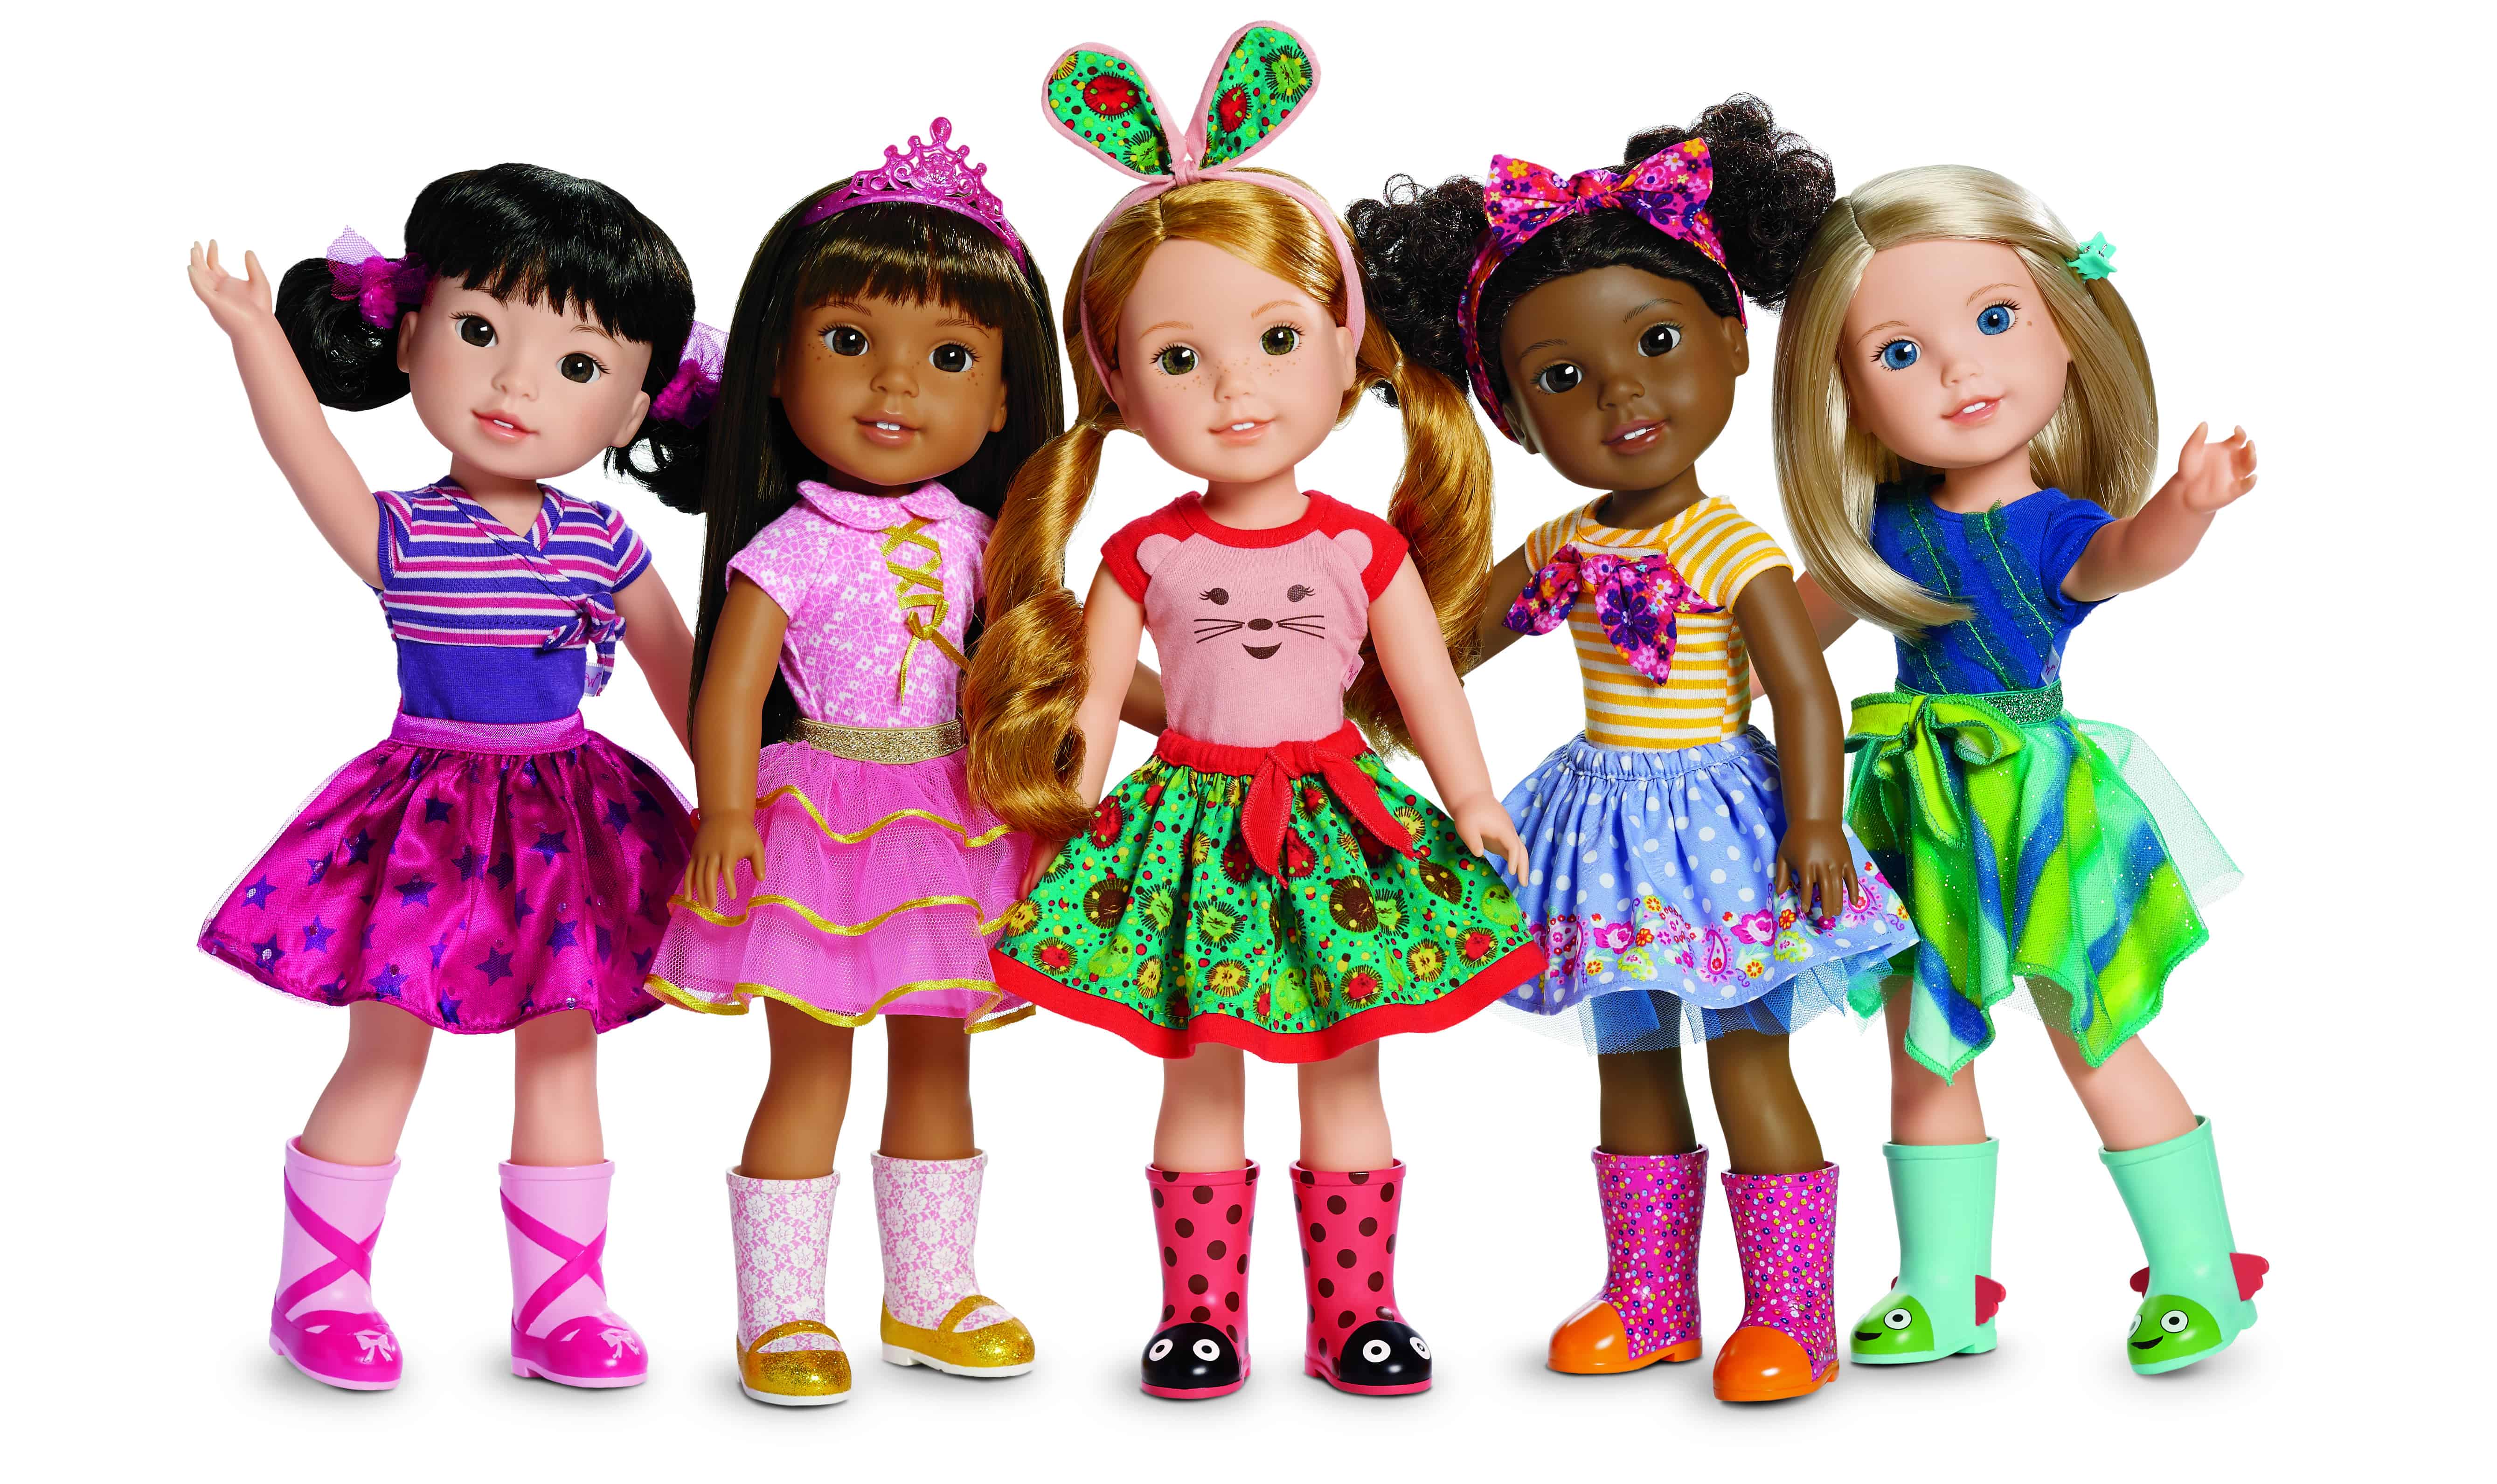 Игрушки про куклу. Американ гёрл. Куклы для девочек. Современные куклы. Популярные куклы.